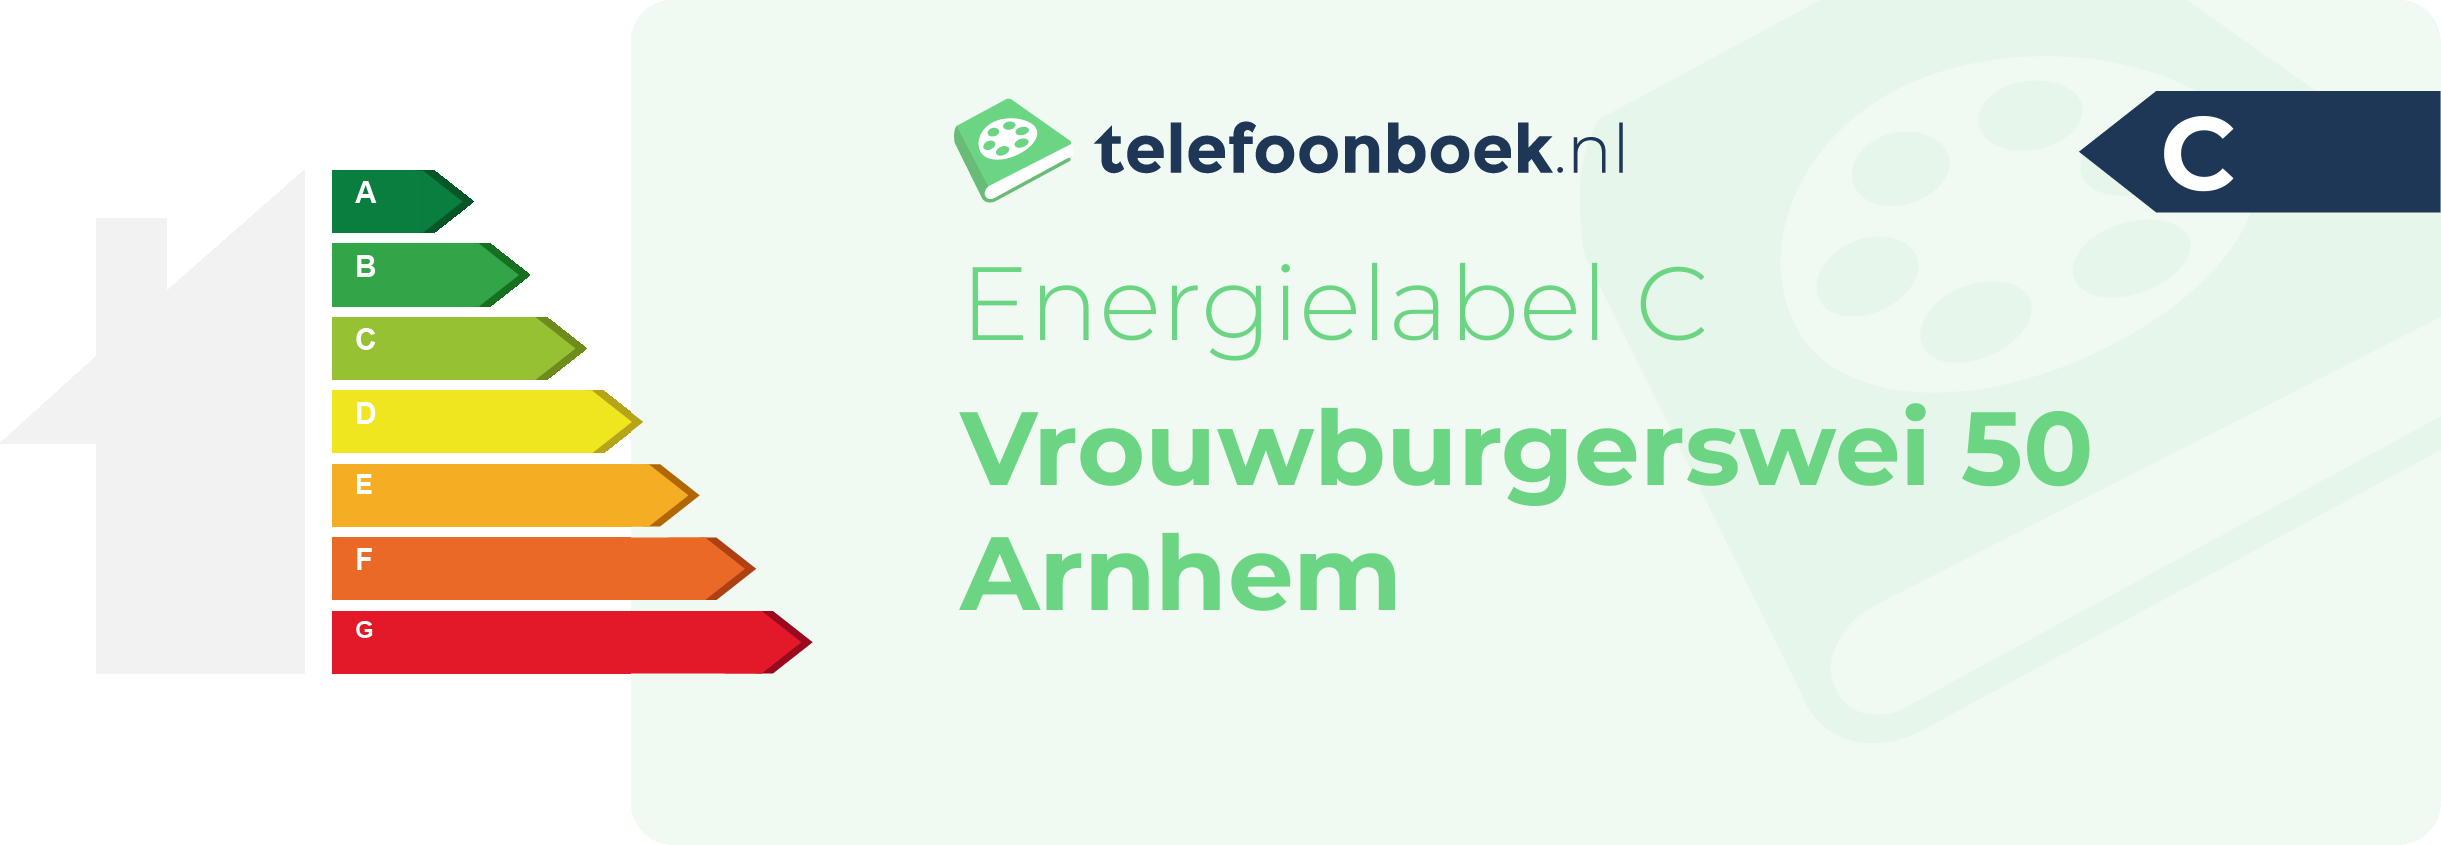 Energielabel Vrouwburgerswei 50 Arnhem